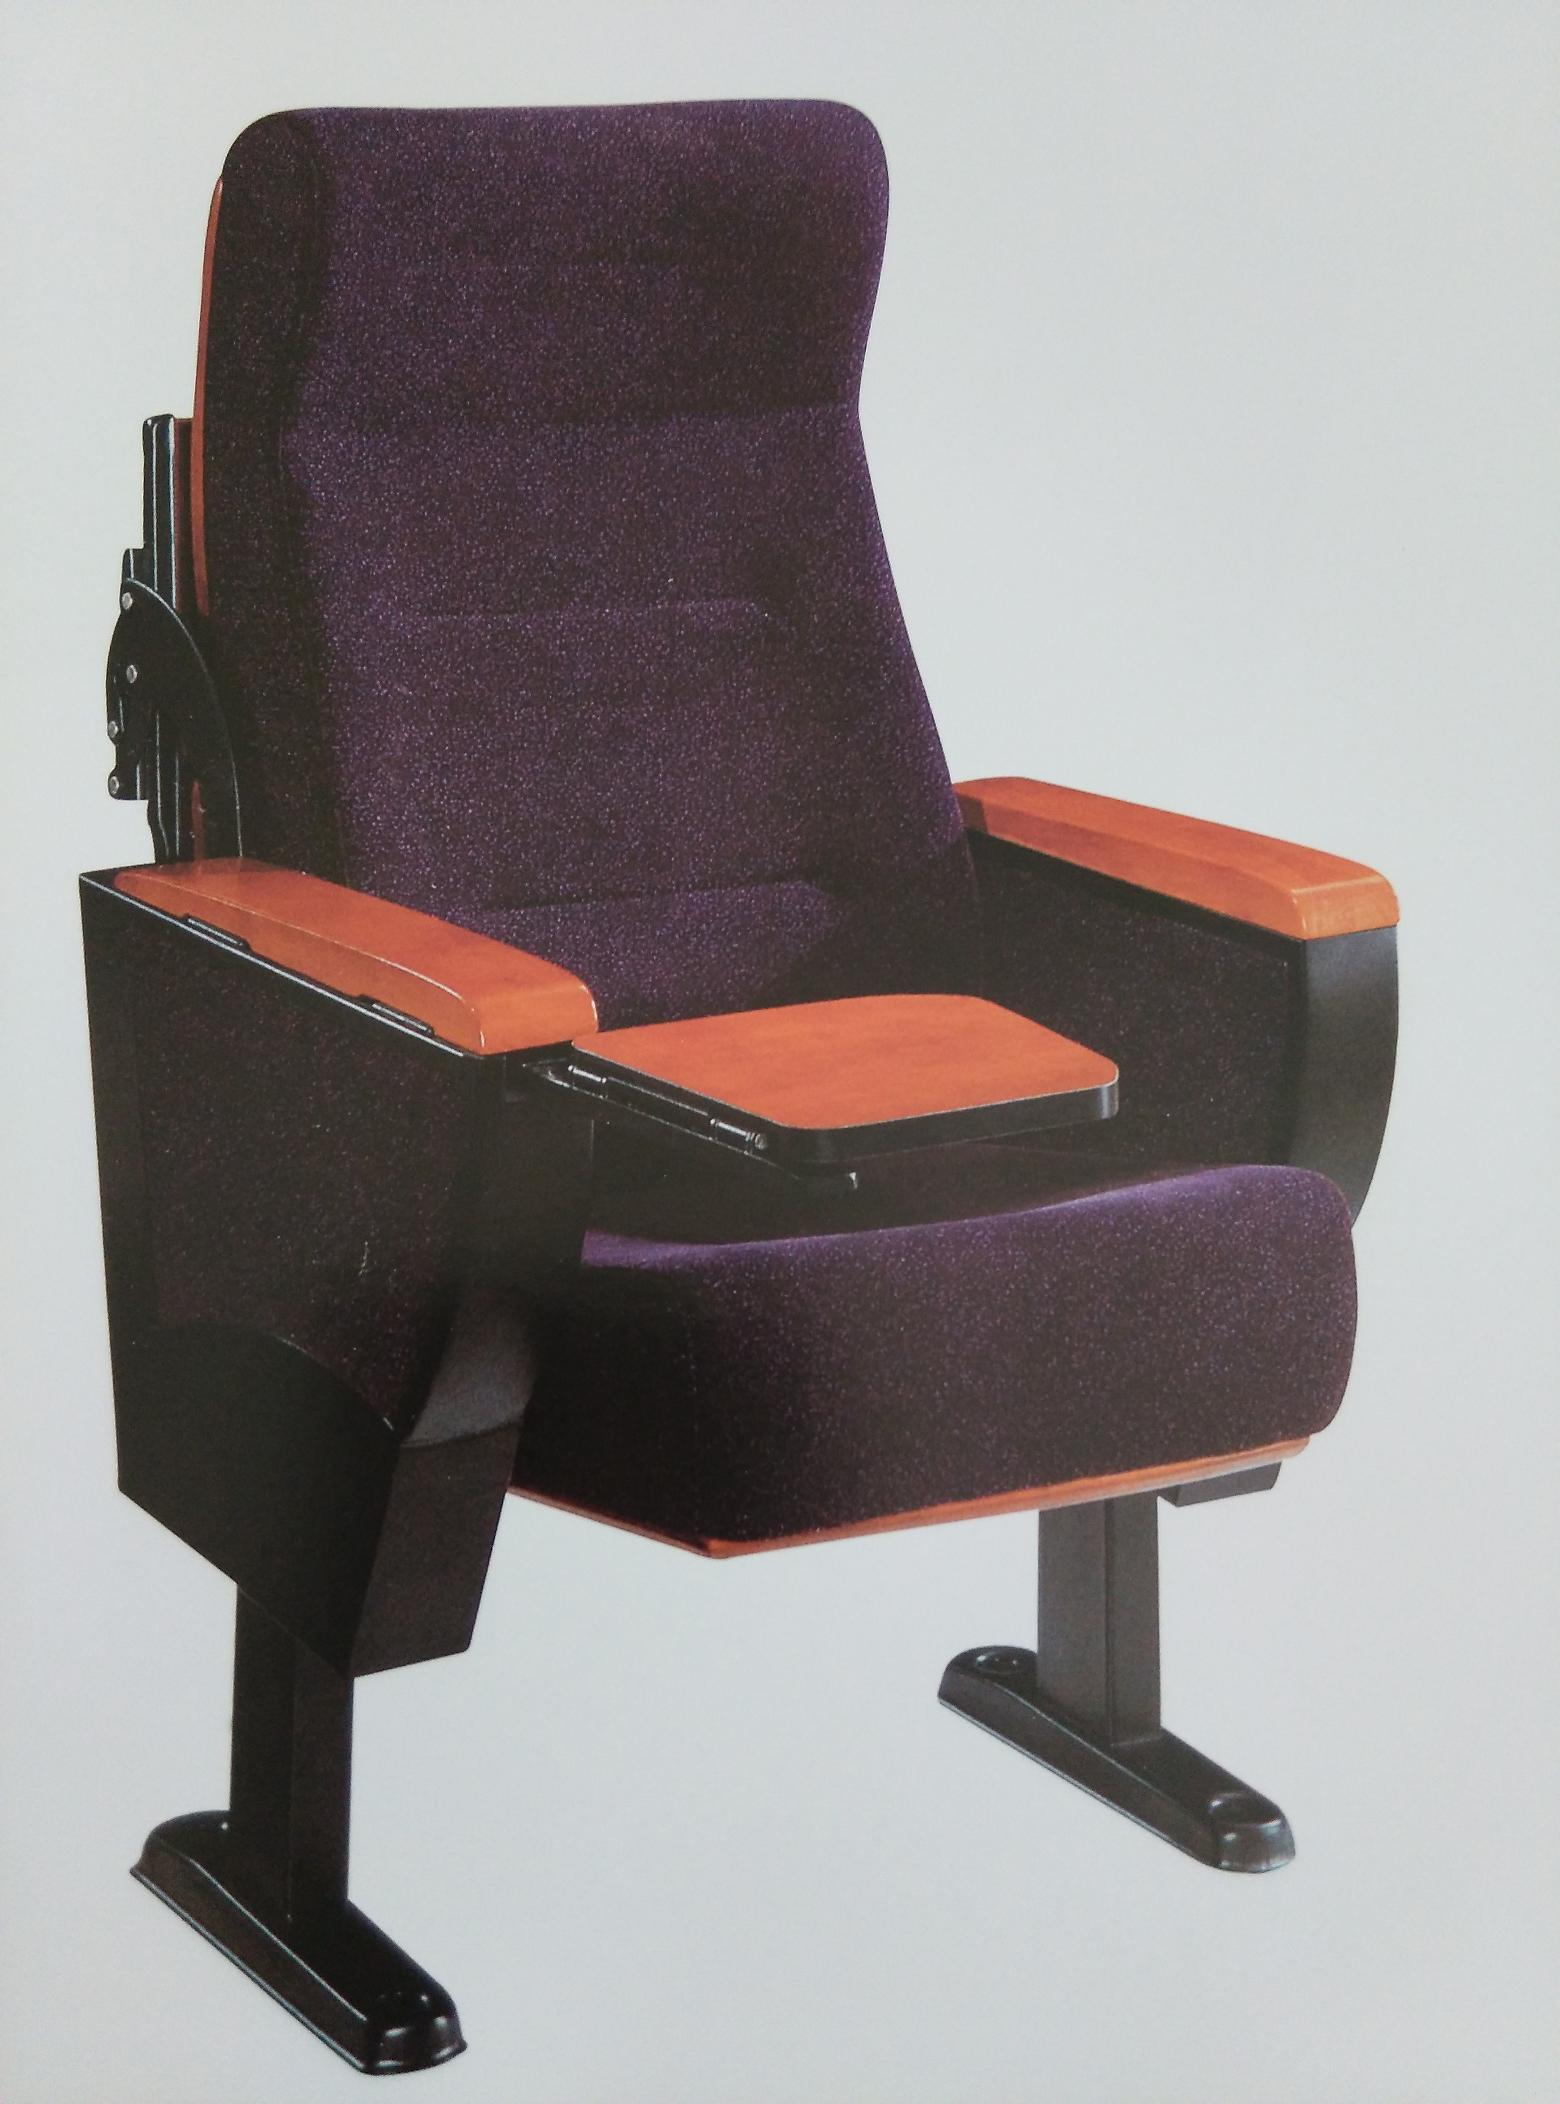 Hight Back Theatre Chairs Cinema Chair VIP Auditorium Chair (XC-2021)